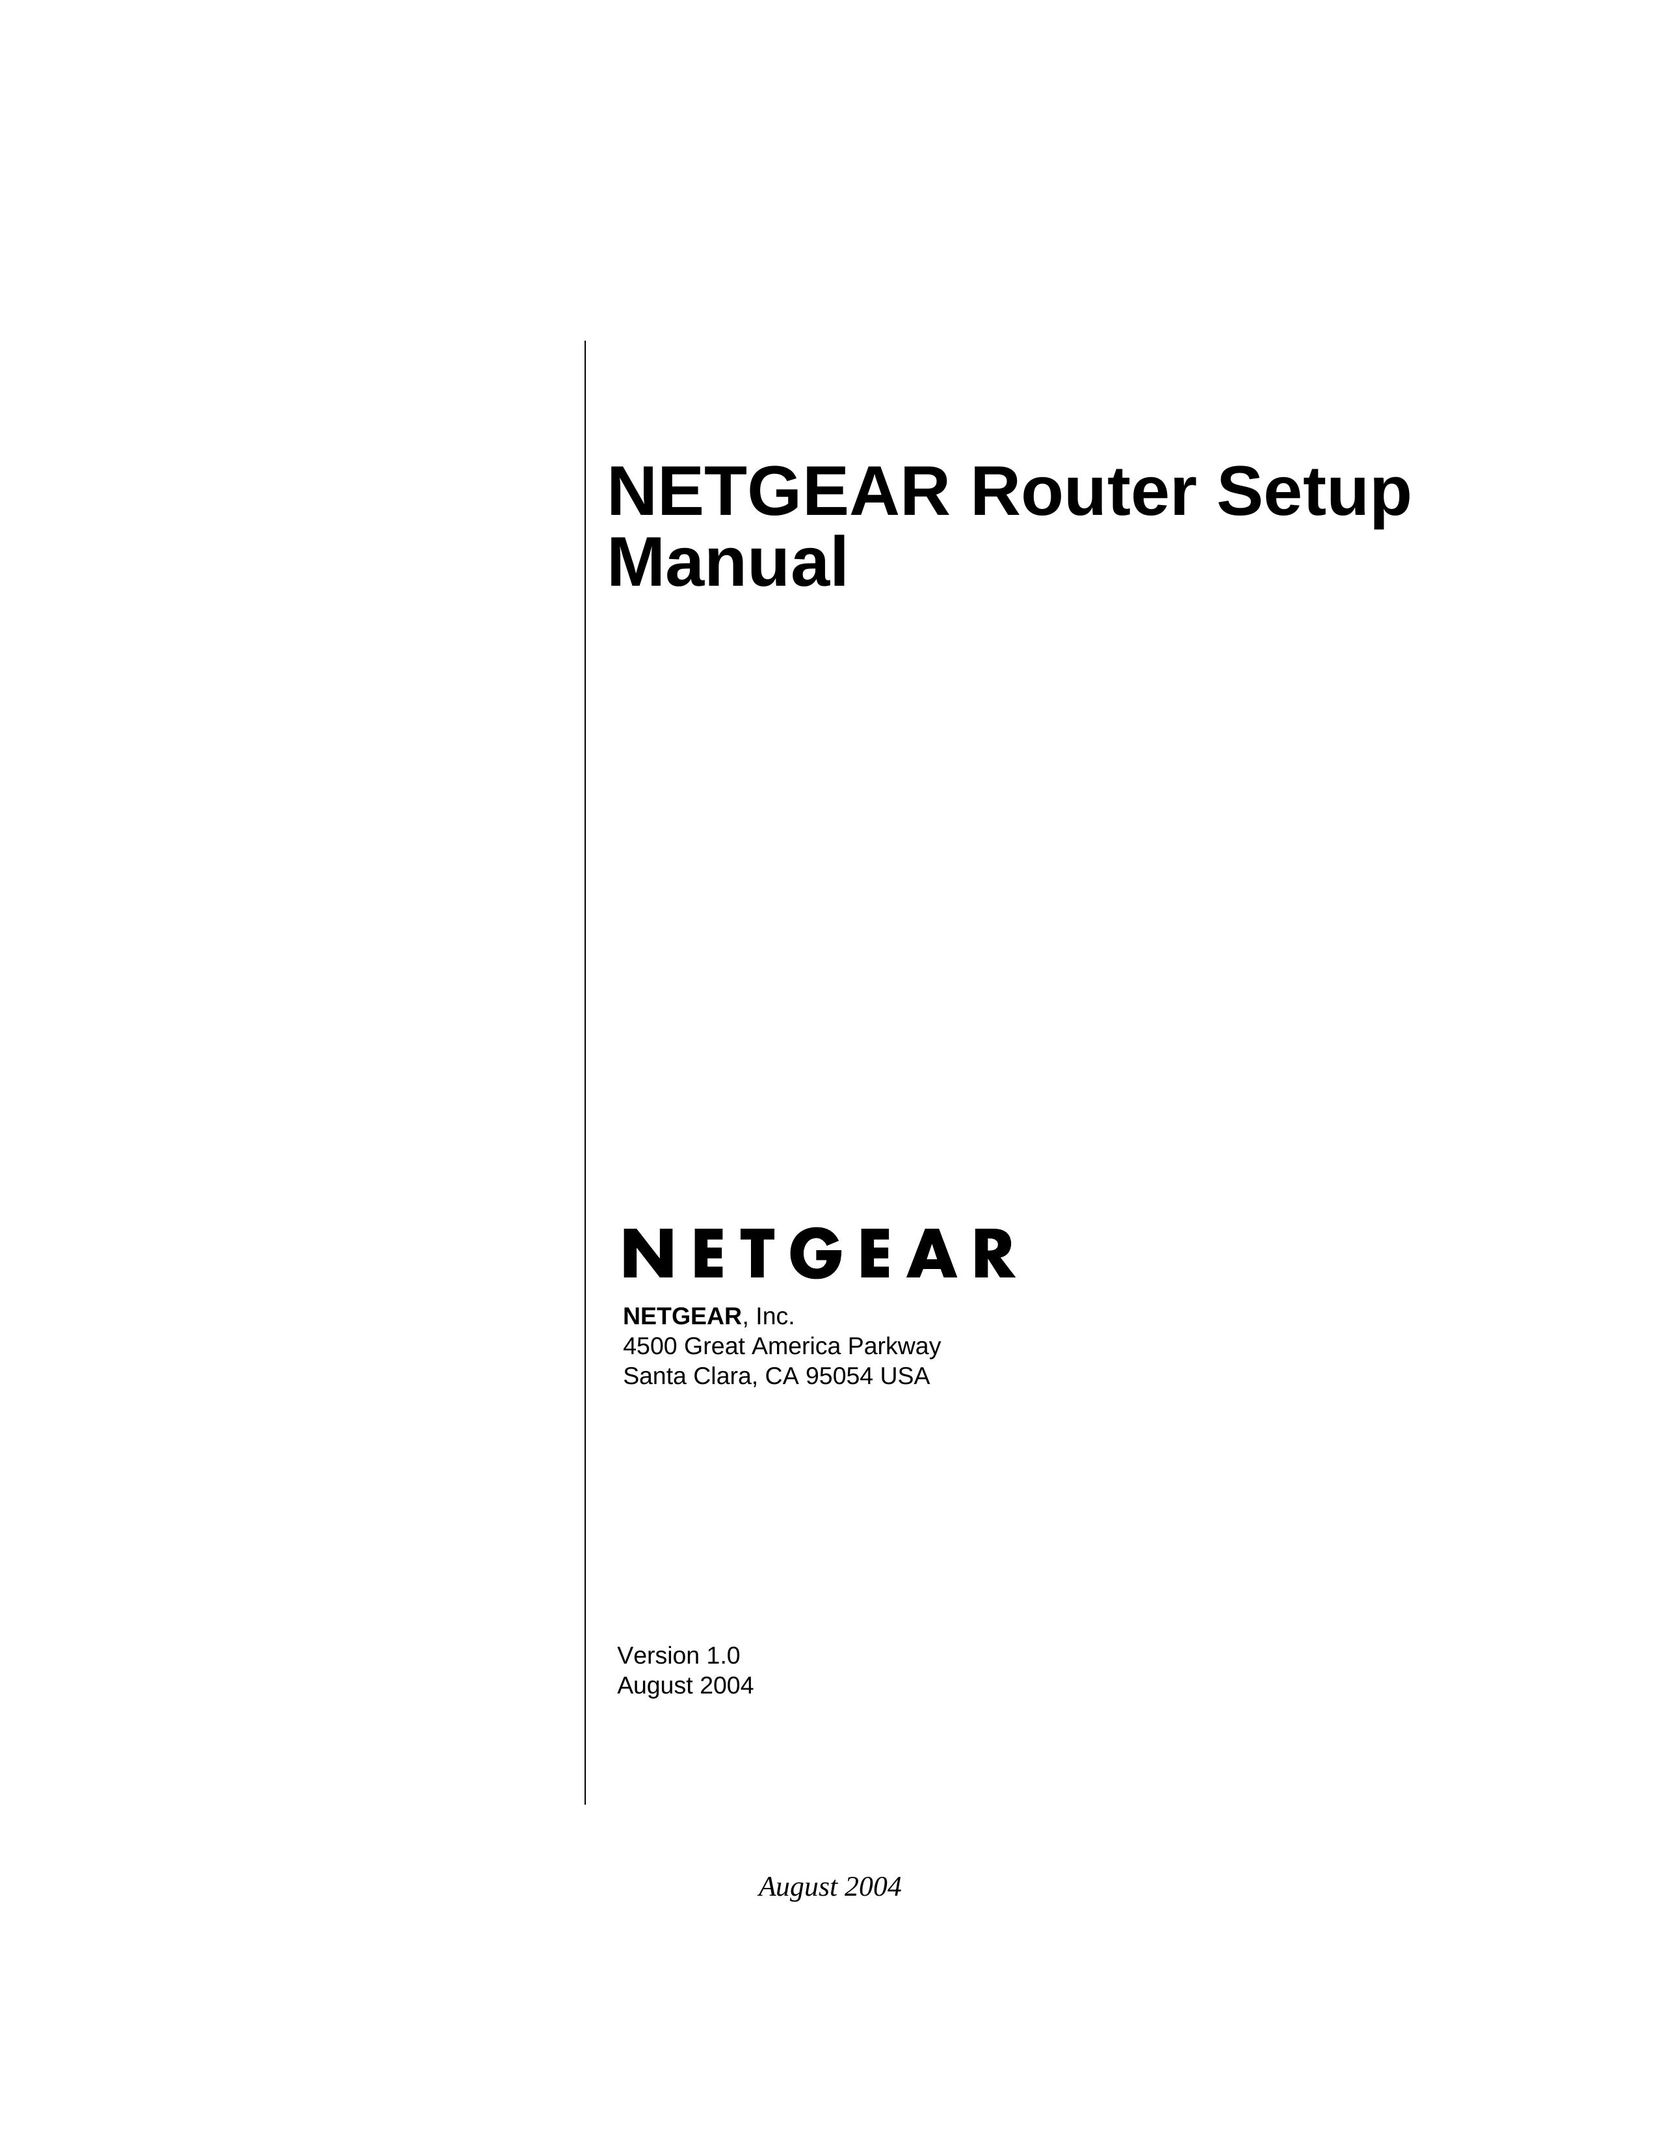 NETGEAR CA 95054 Network Router User Manual